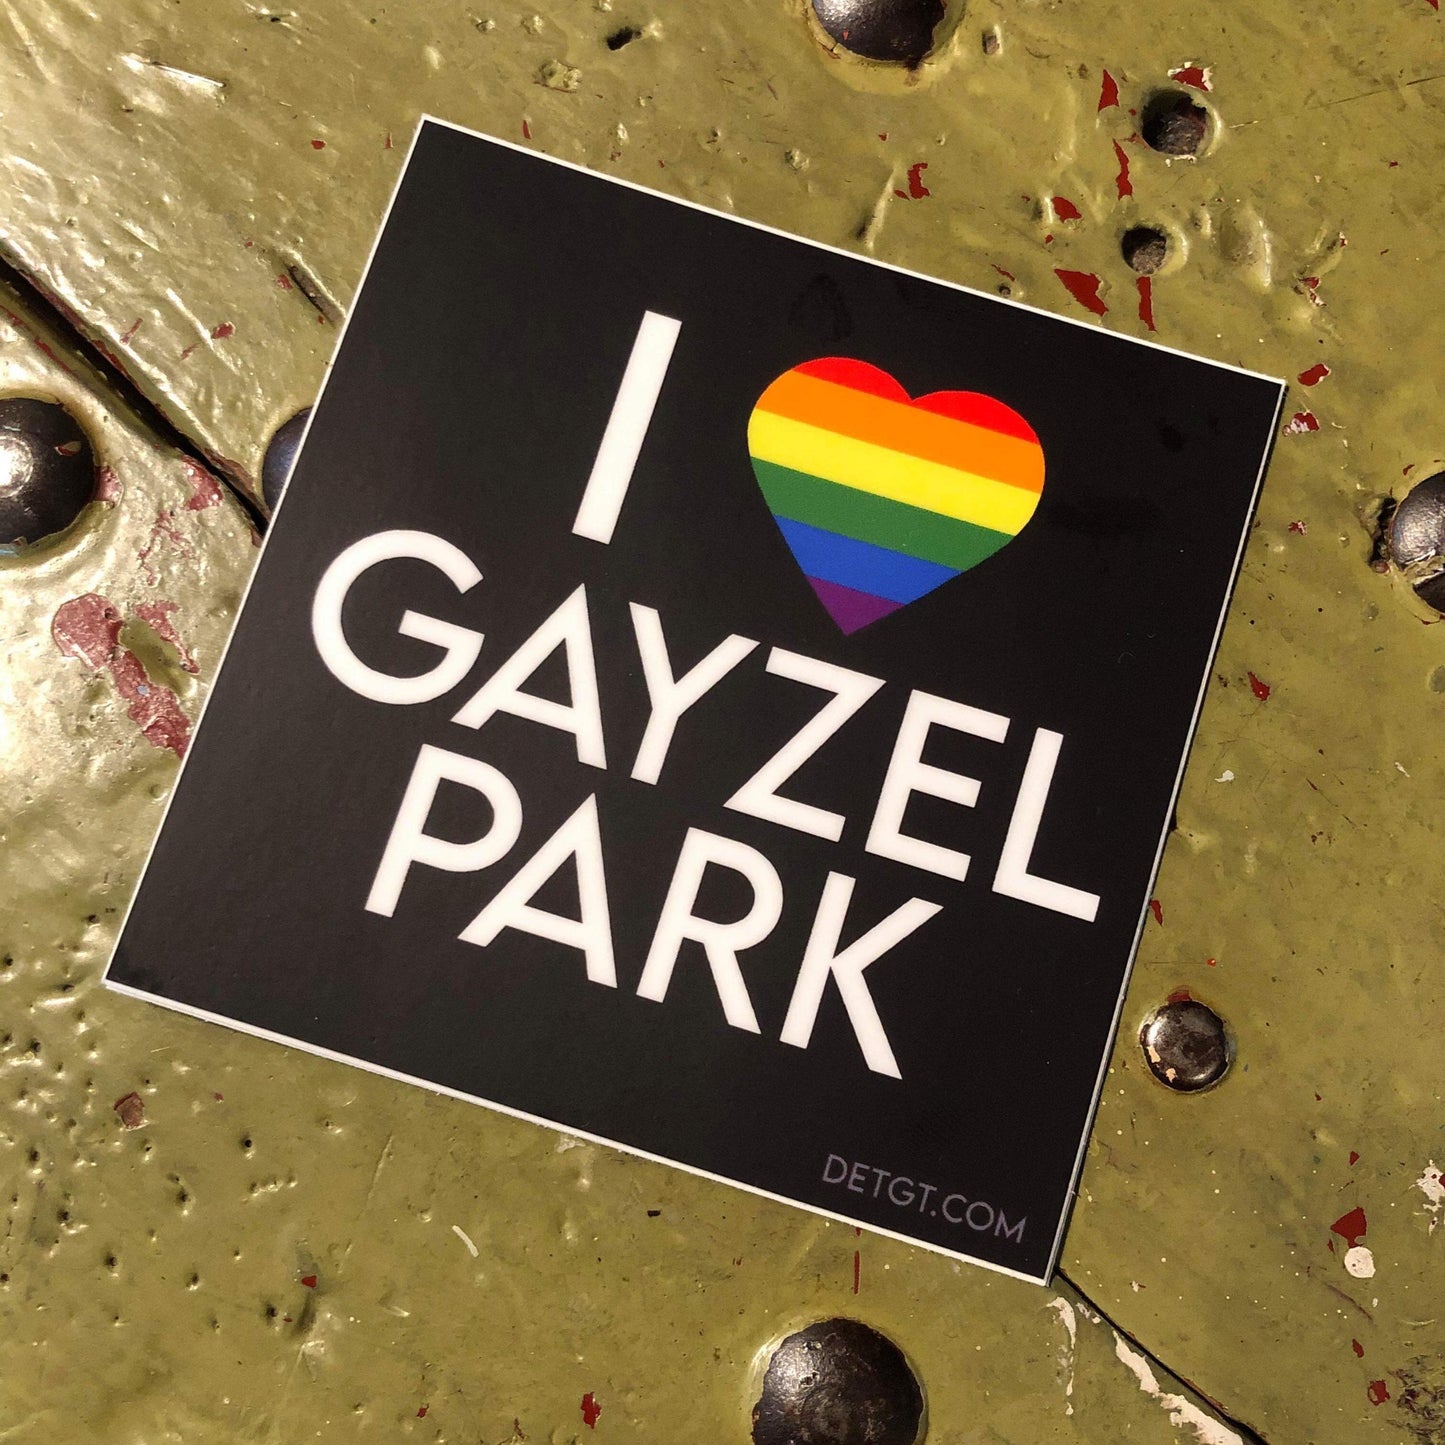 I Heart Gayzel Park - Sticker